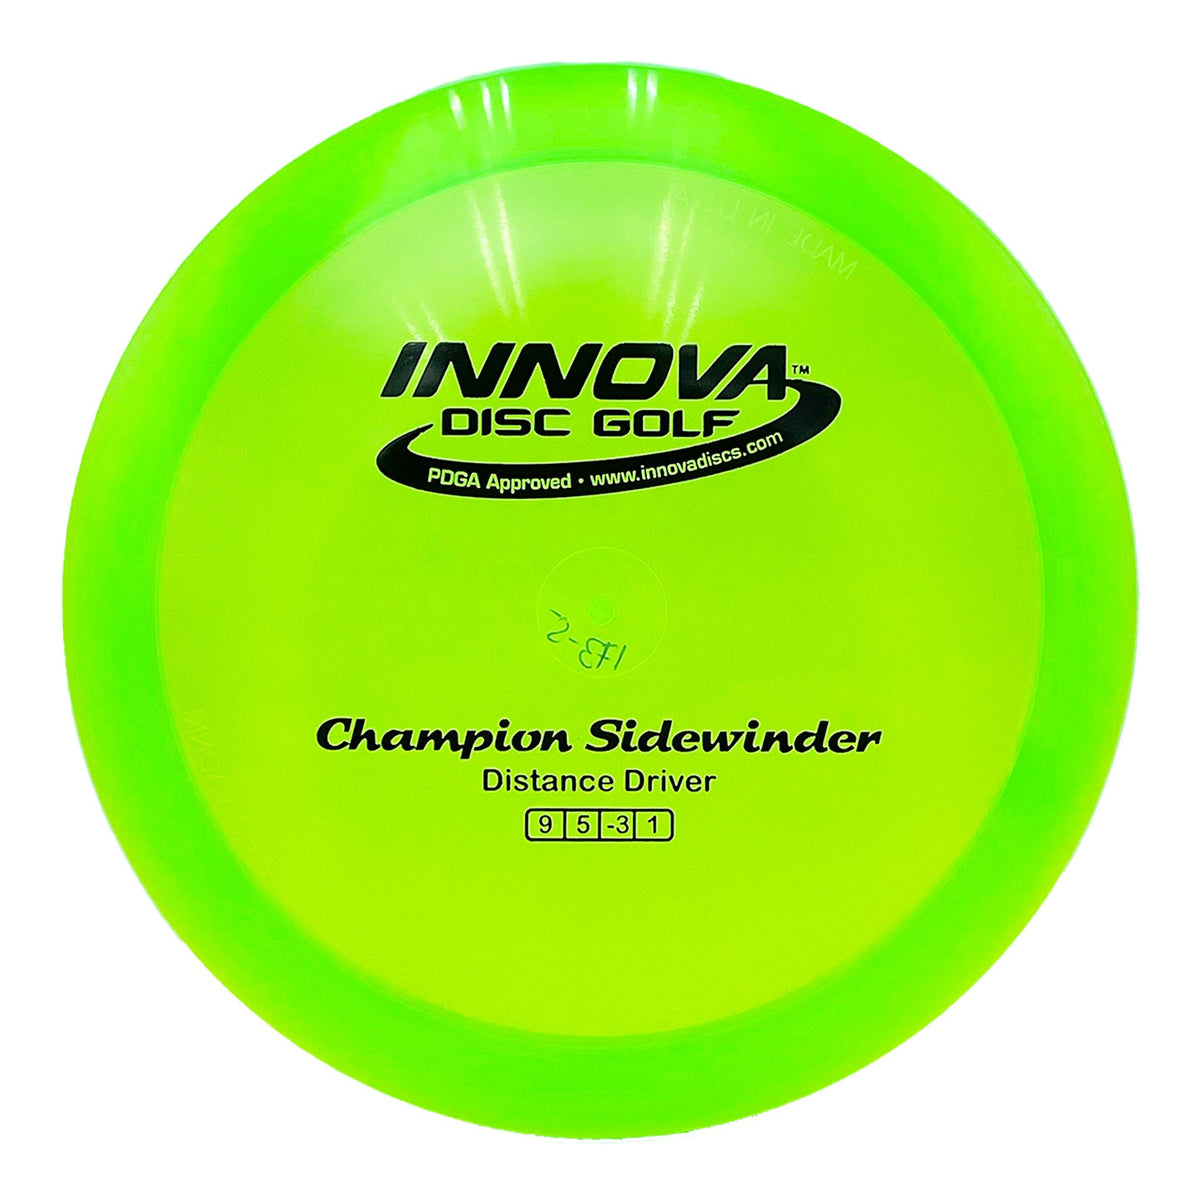 Innova Disc Golf Champion Sidewinder distance driver - Green